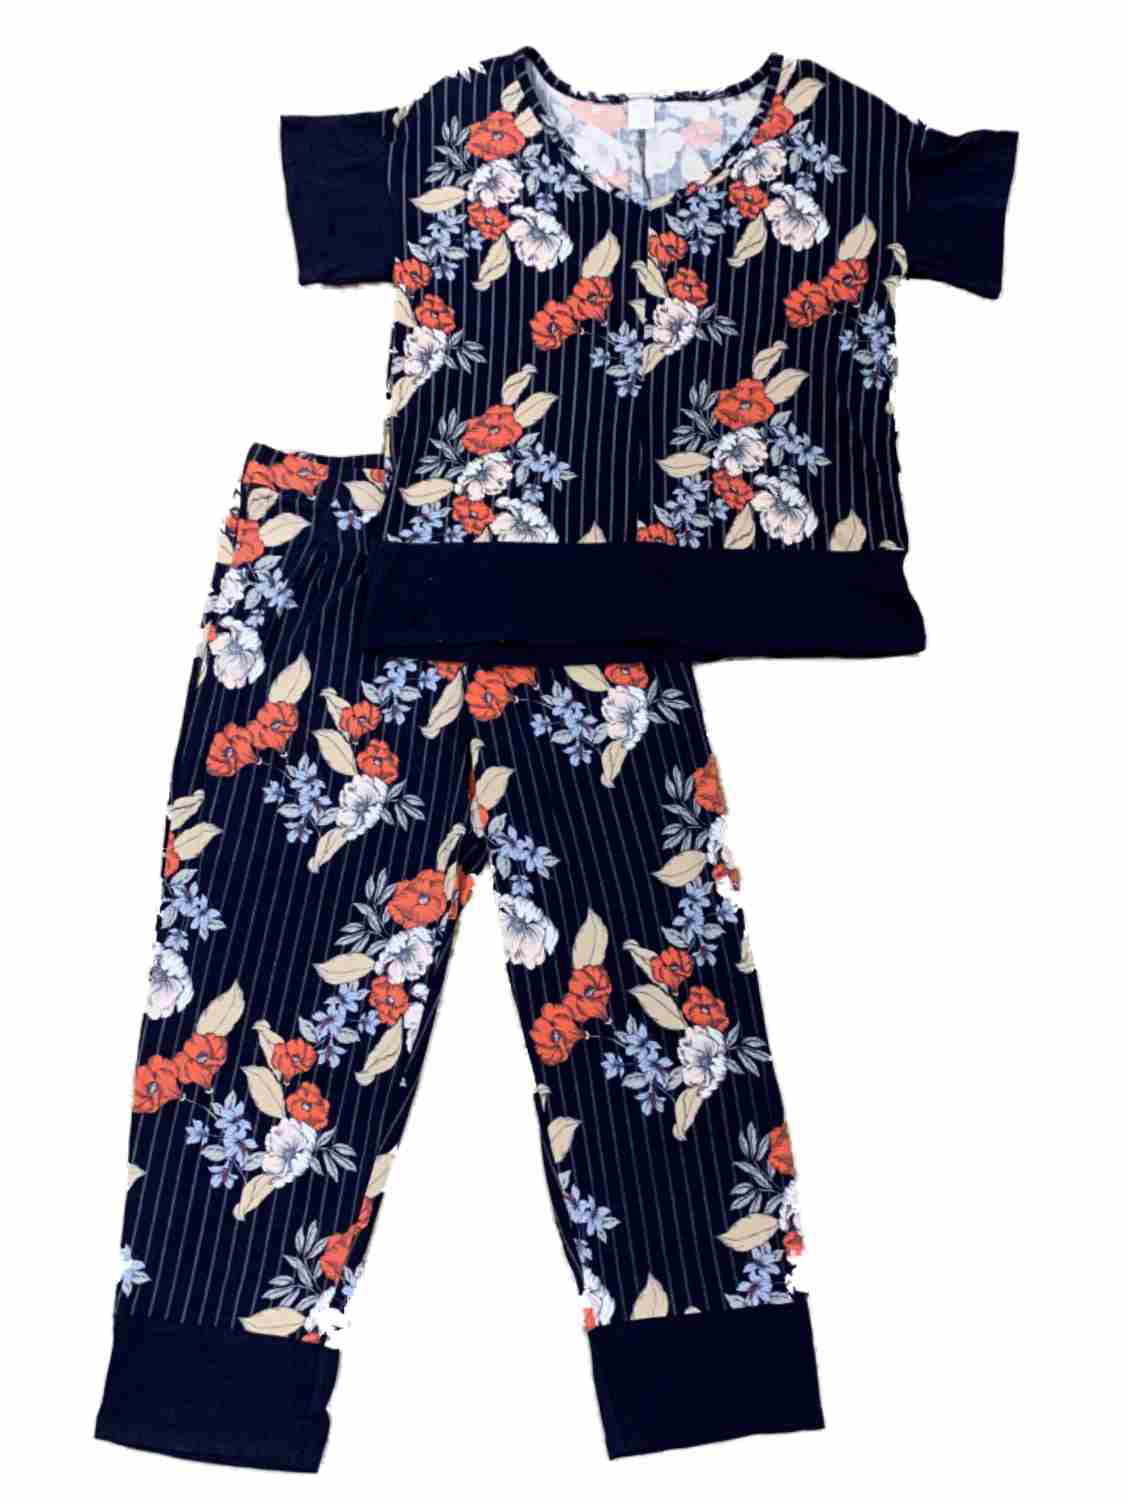 Liz Claiborne Womens 2PC Navy & Floral Short Sleeve Lightweight Pajama Set